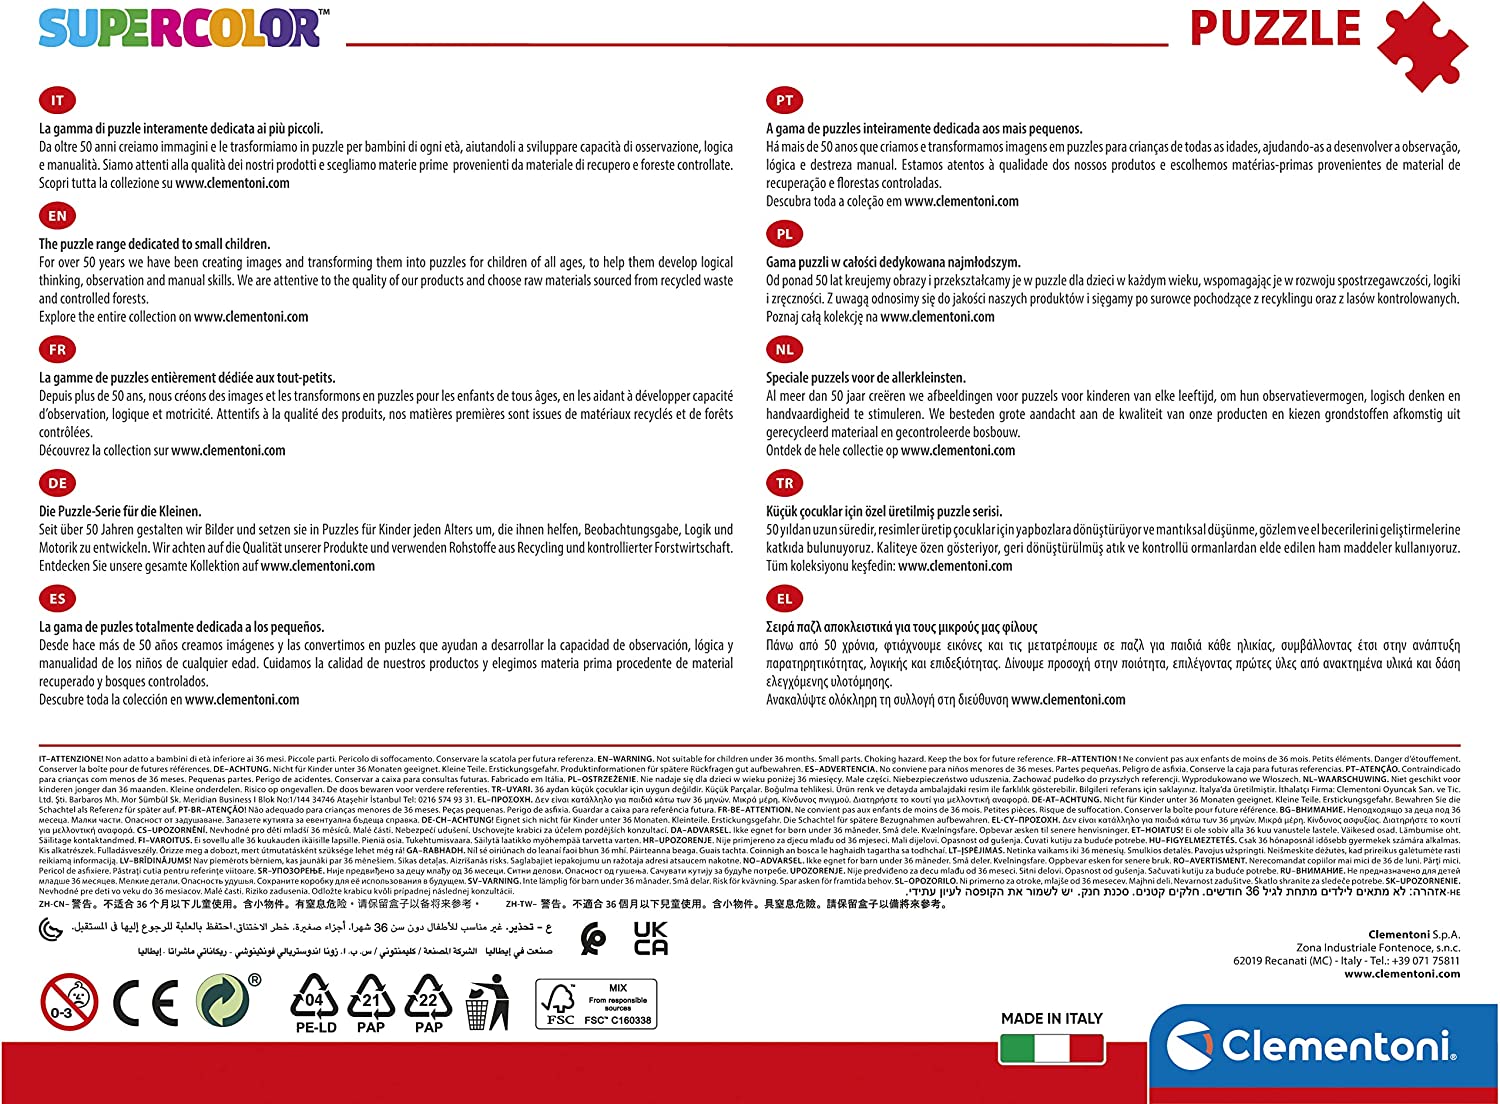 Puzzle Princess Maxi 24 Pezzi Clementoni toysvaldichiana.it 